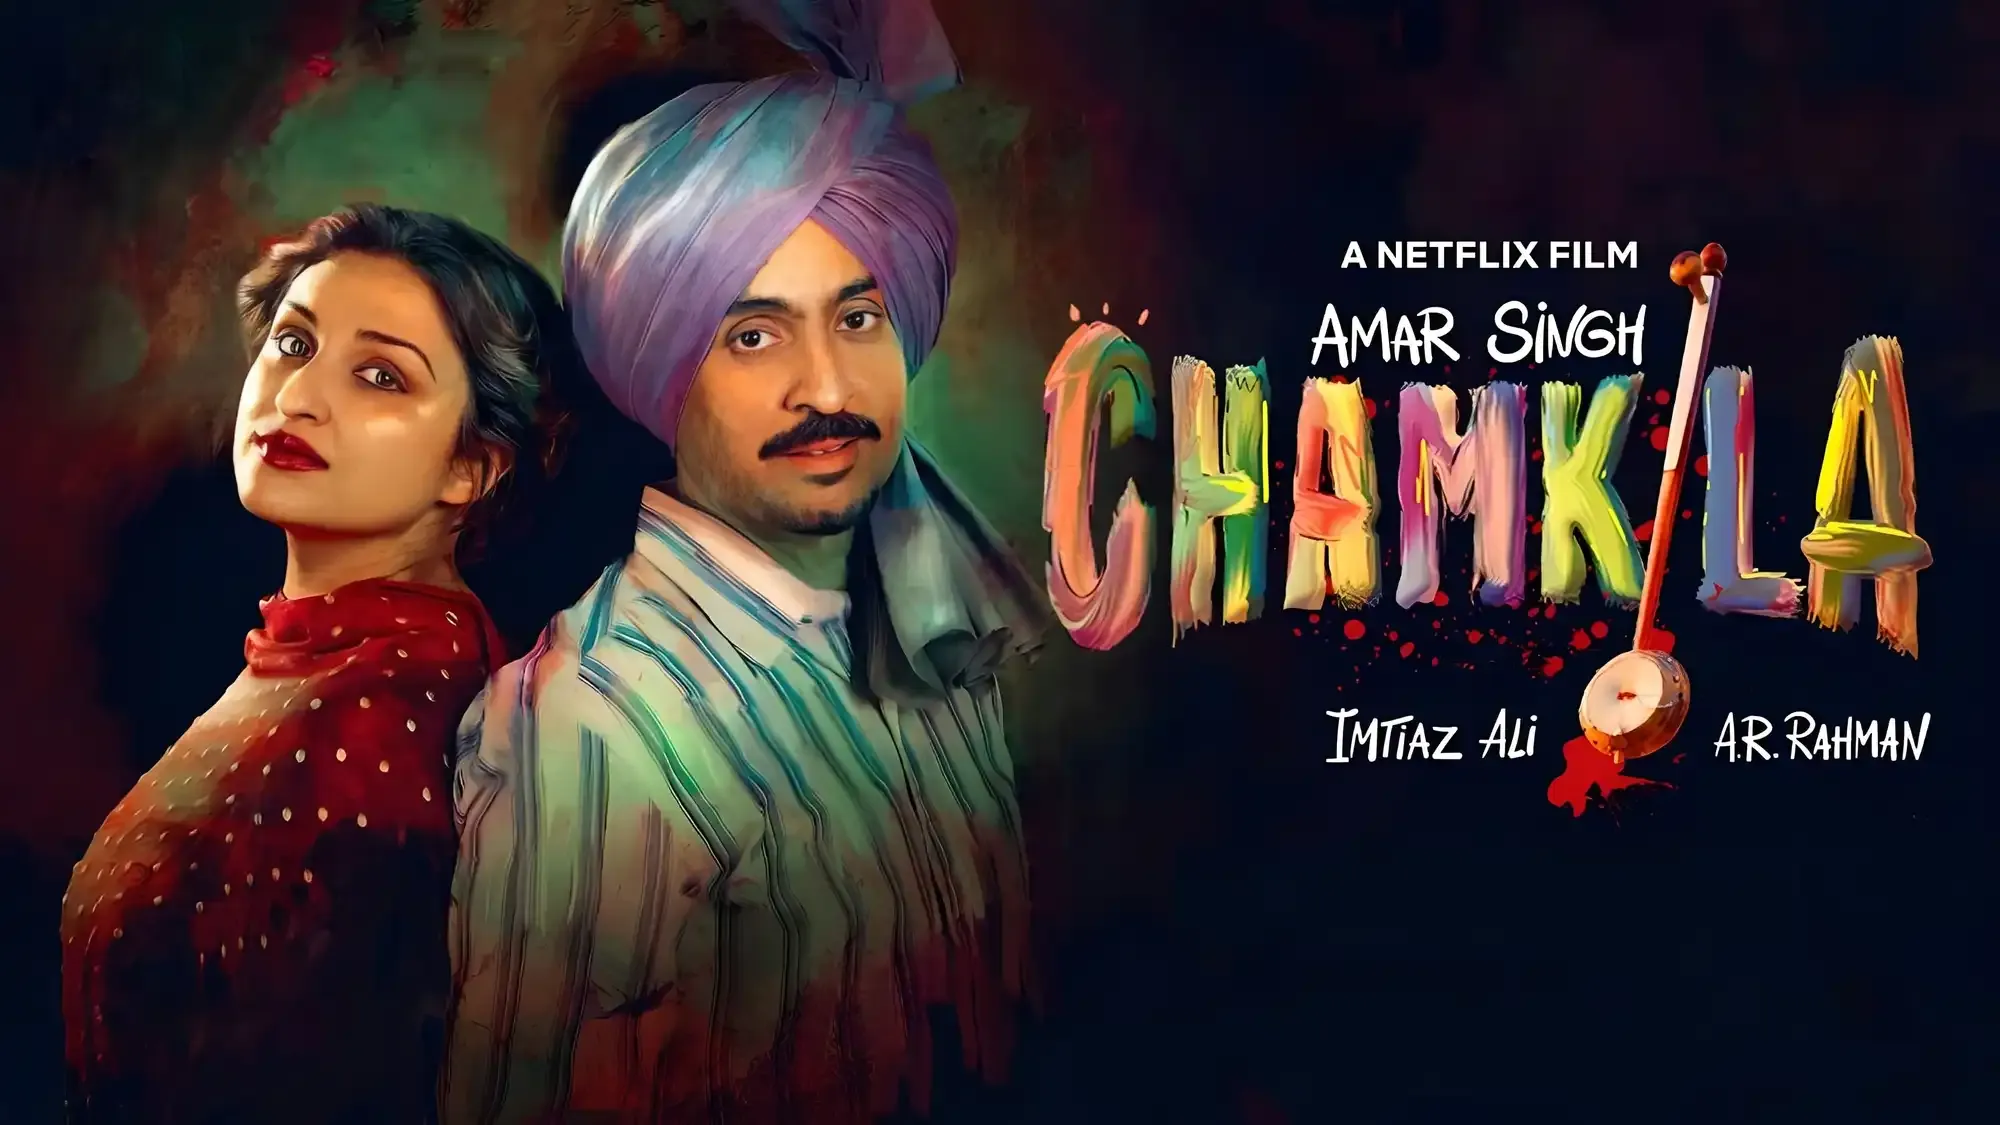 Amar Singh Chamkila movie review